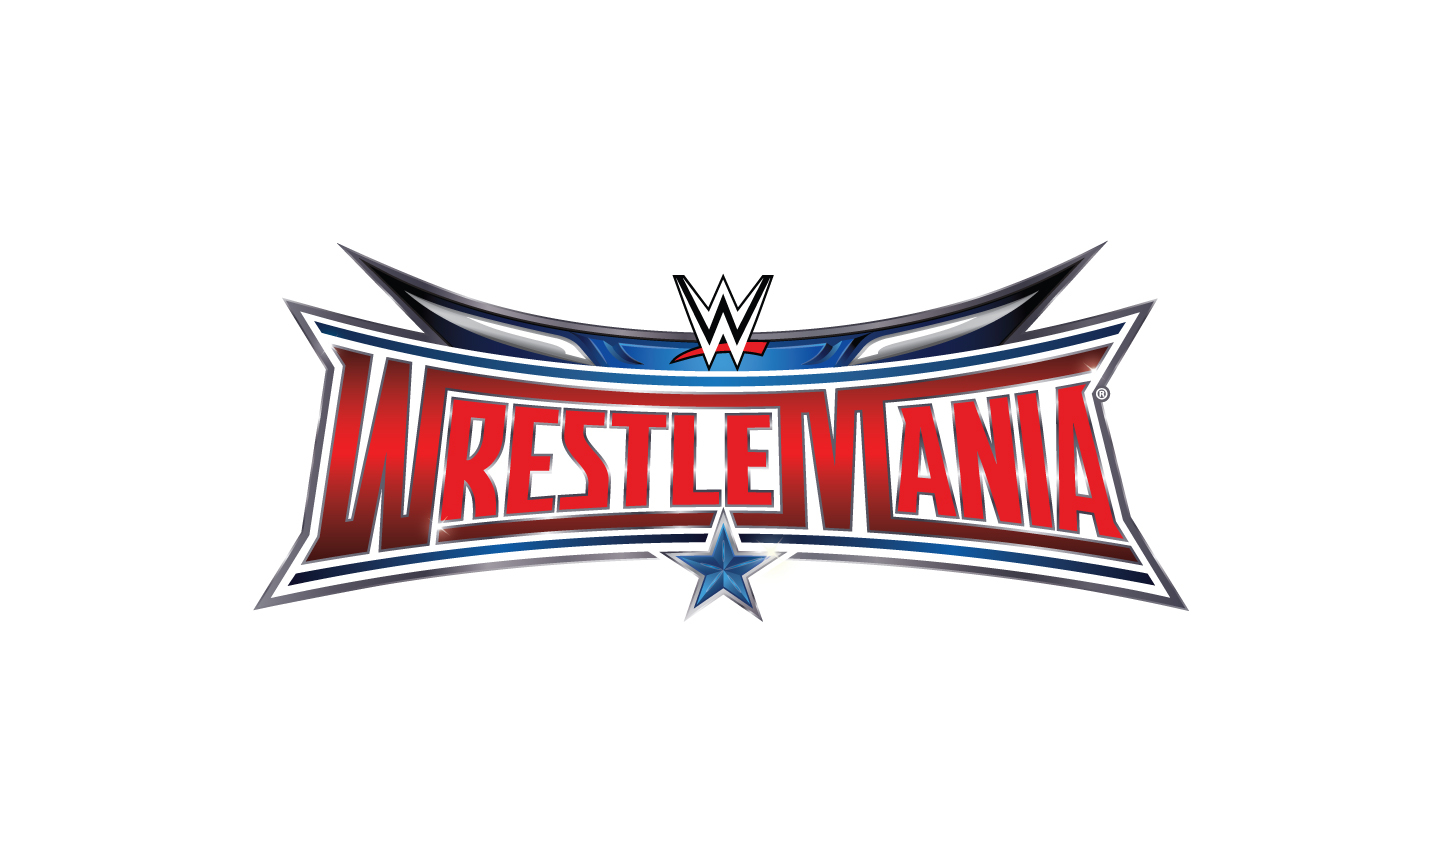 WWF Wrestlemania Logo PNG Transparent & SVG Vector - Freebie Supply